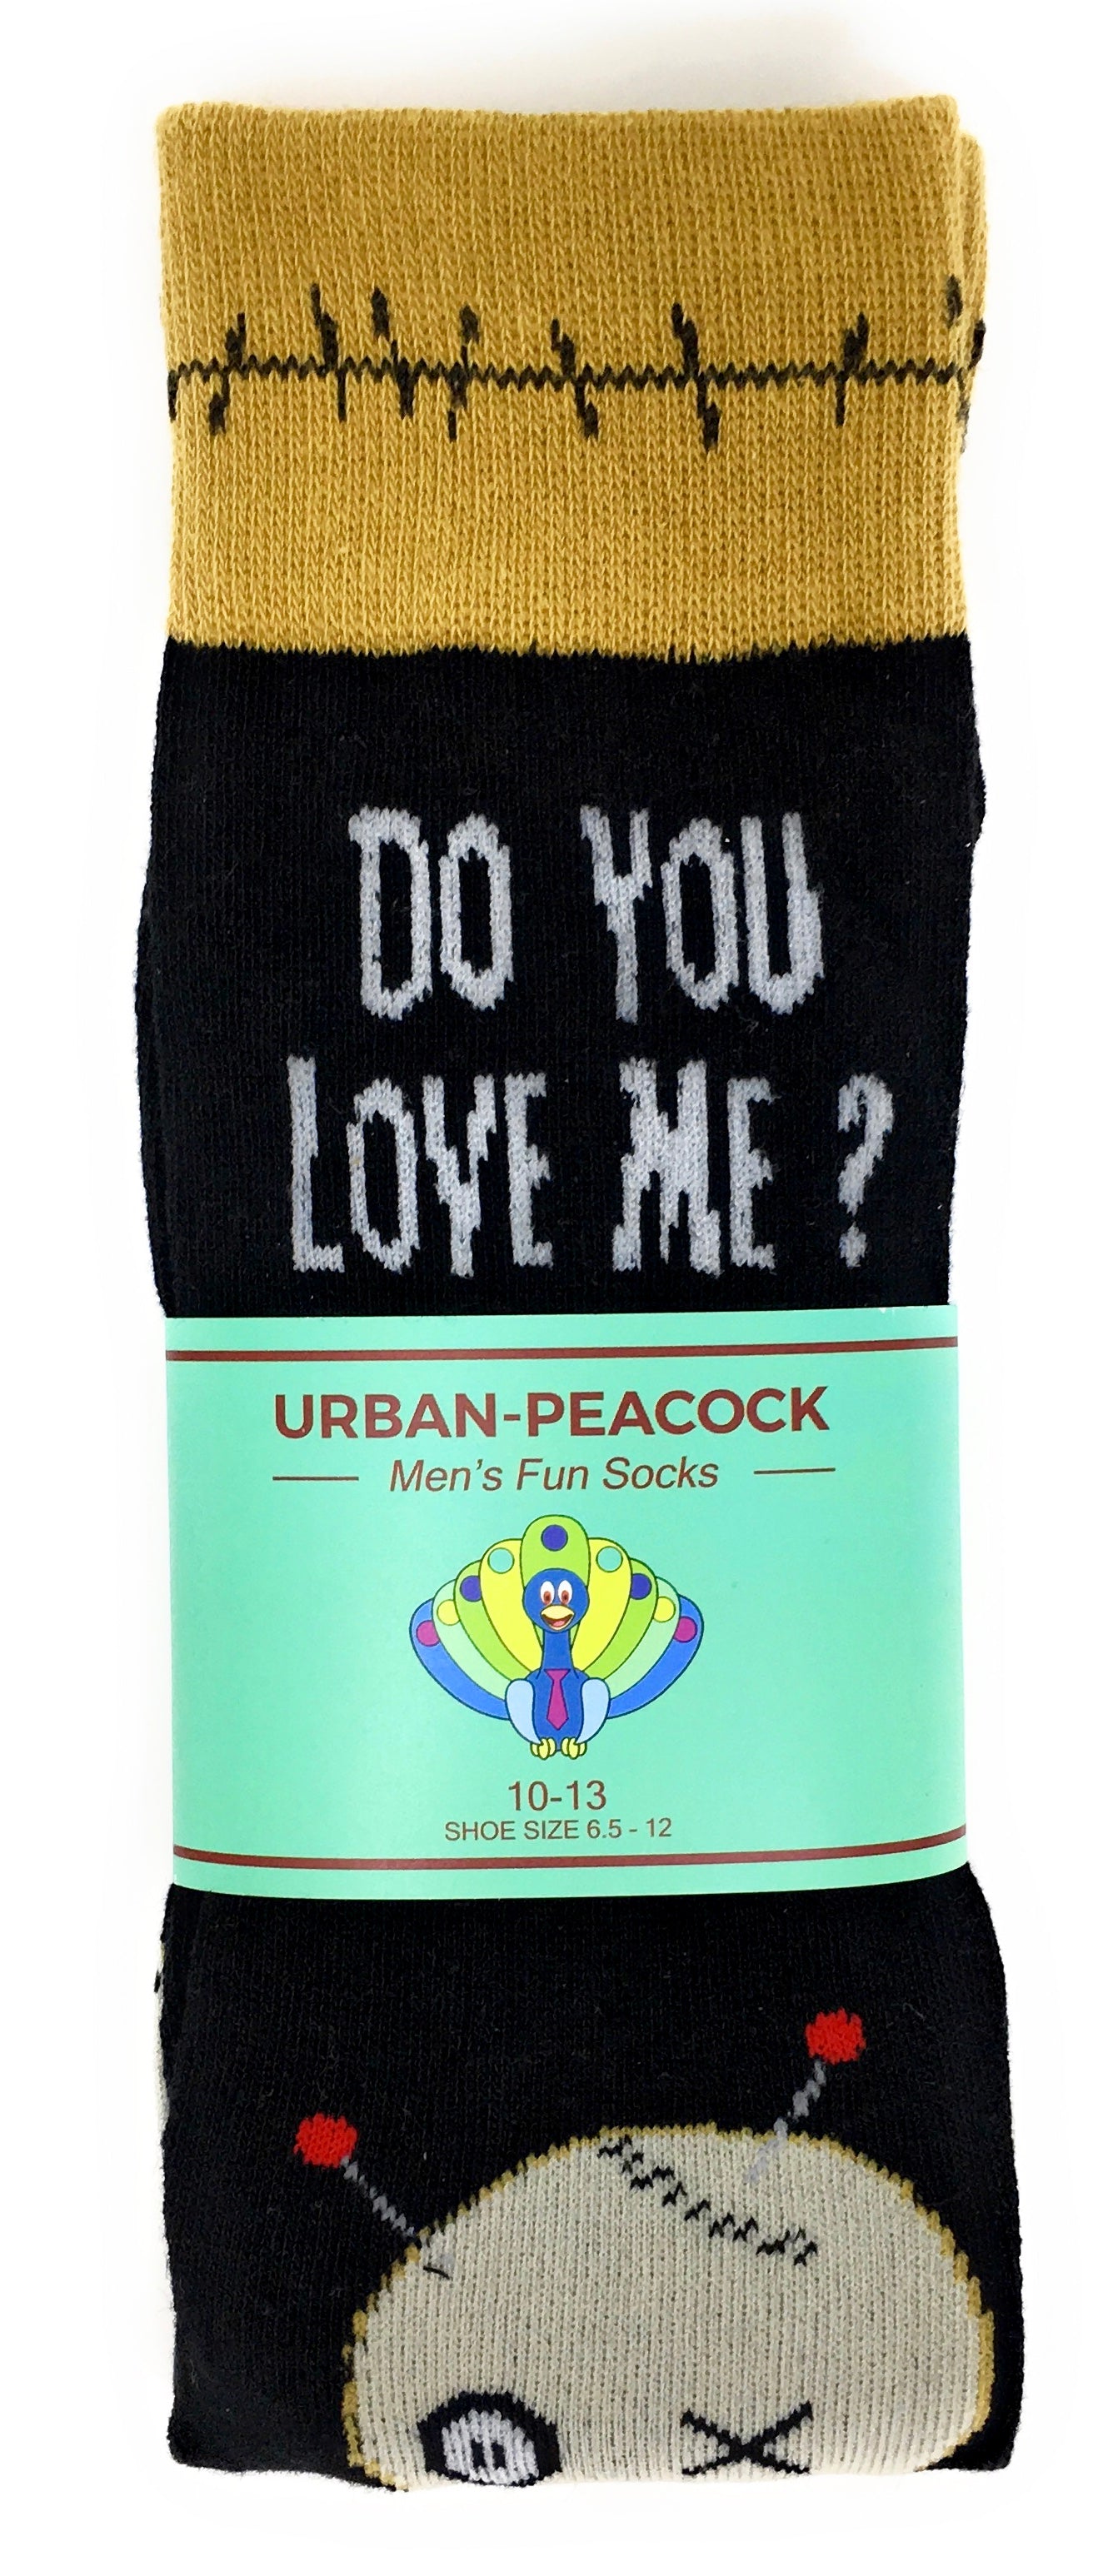 Urban-Peacock Men's Halloween Novelty Socks - VooDoo Doll